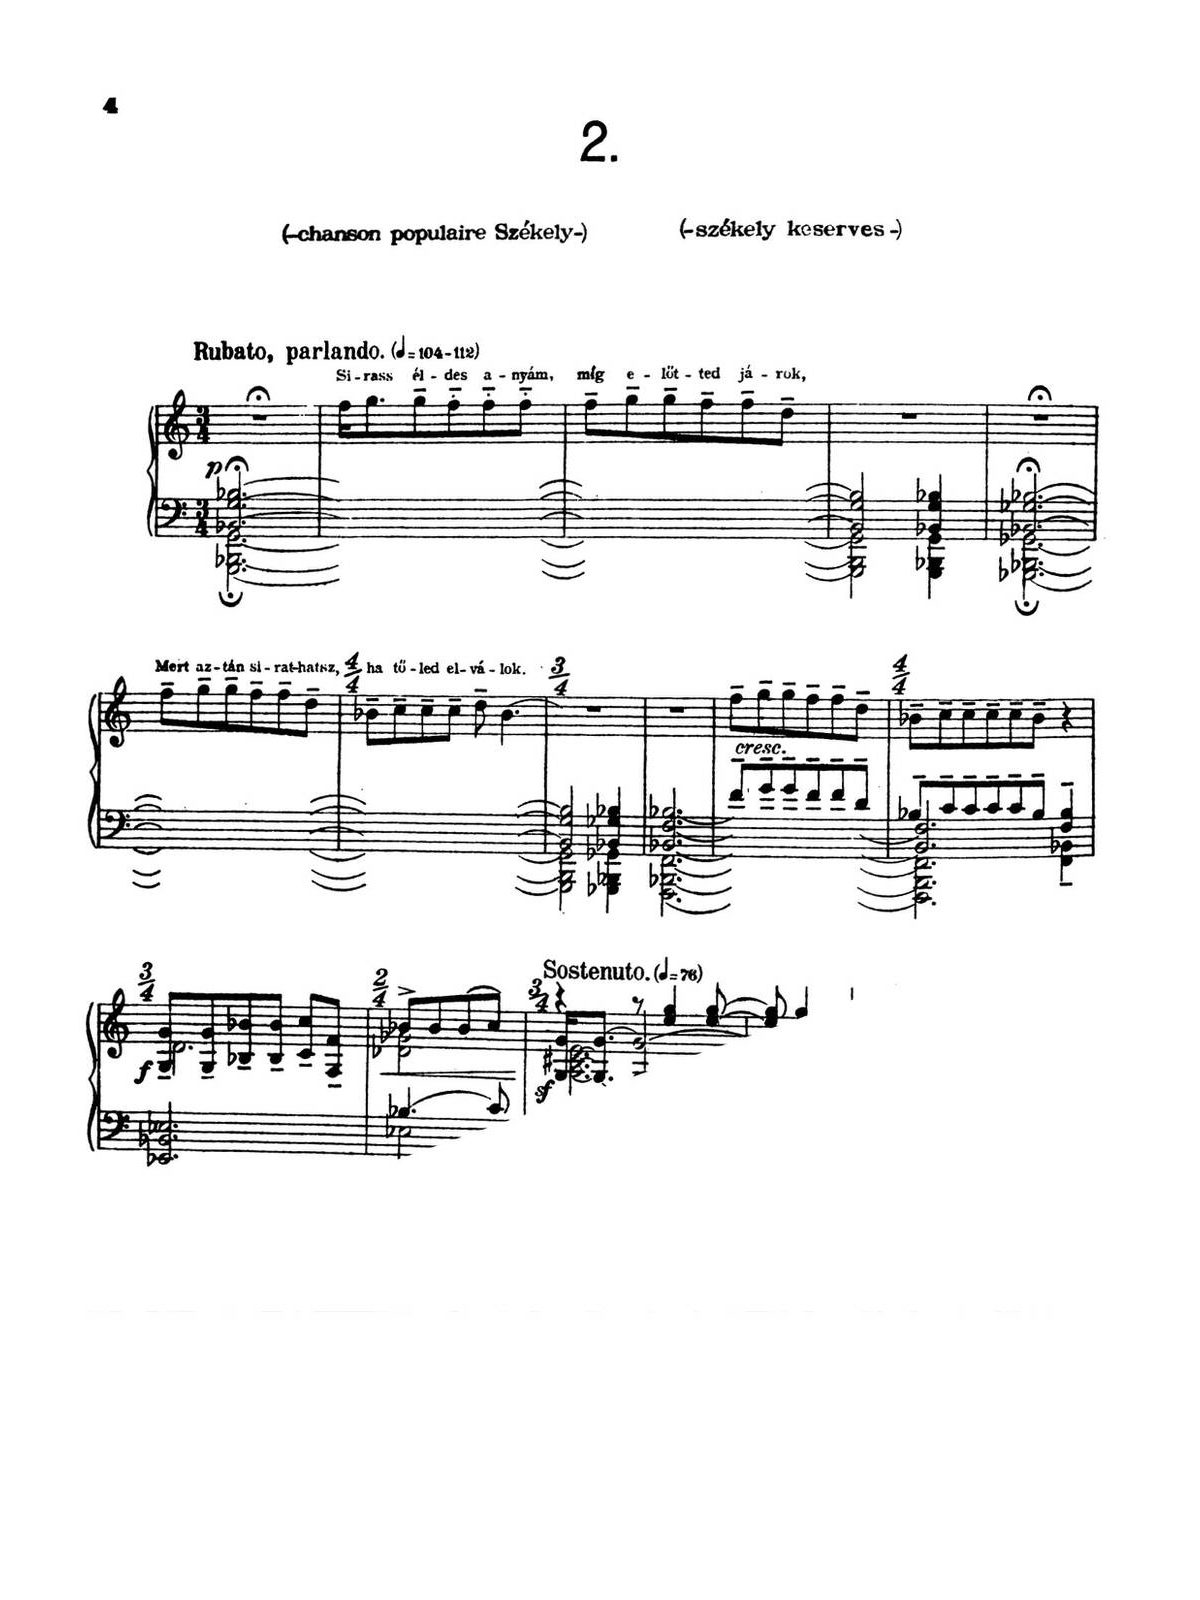 Kodaly, 7 Piano Pieces Op.11-p04